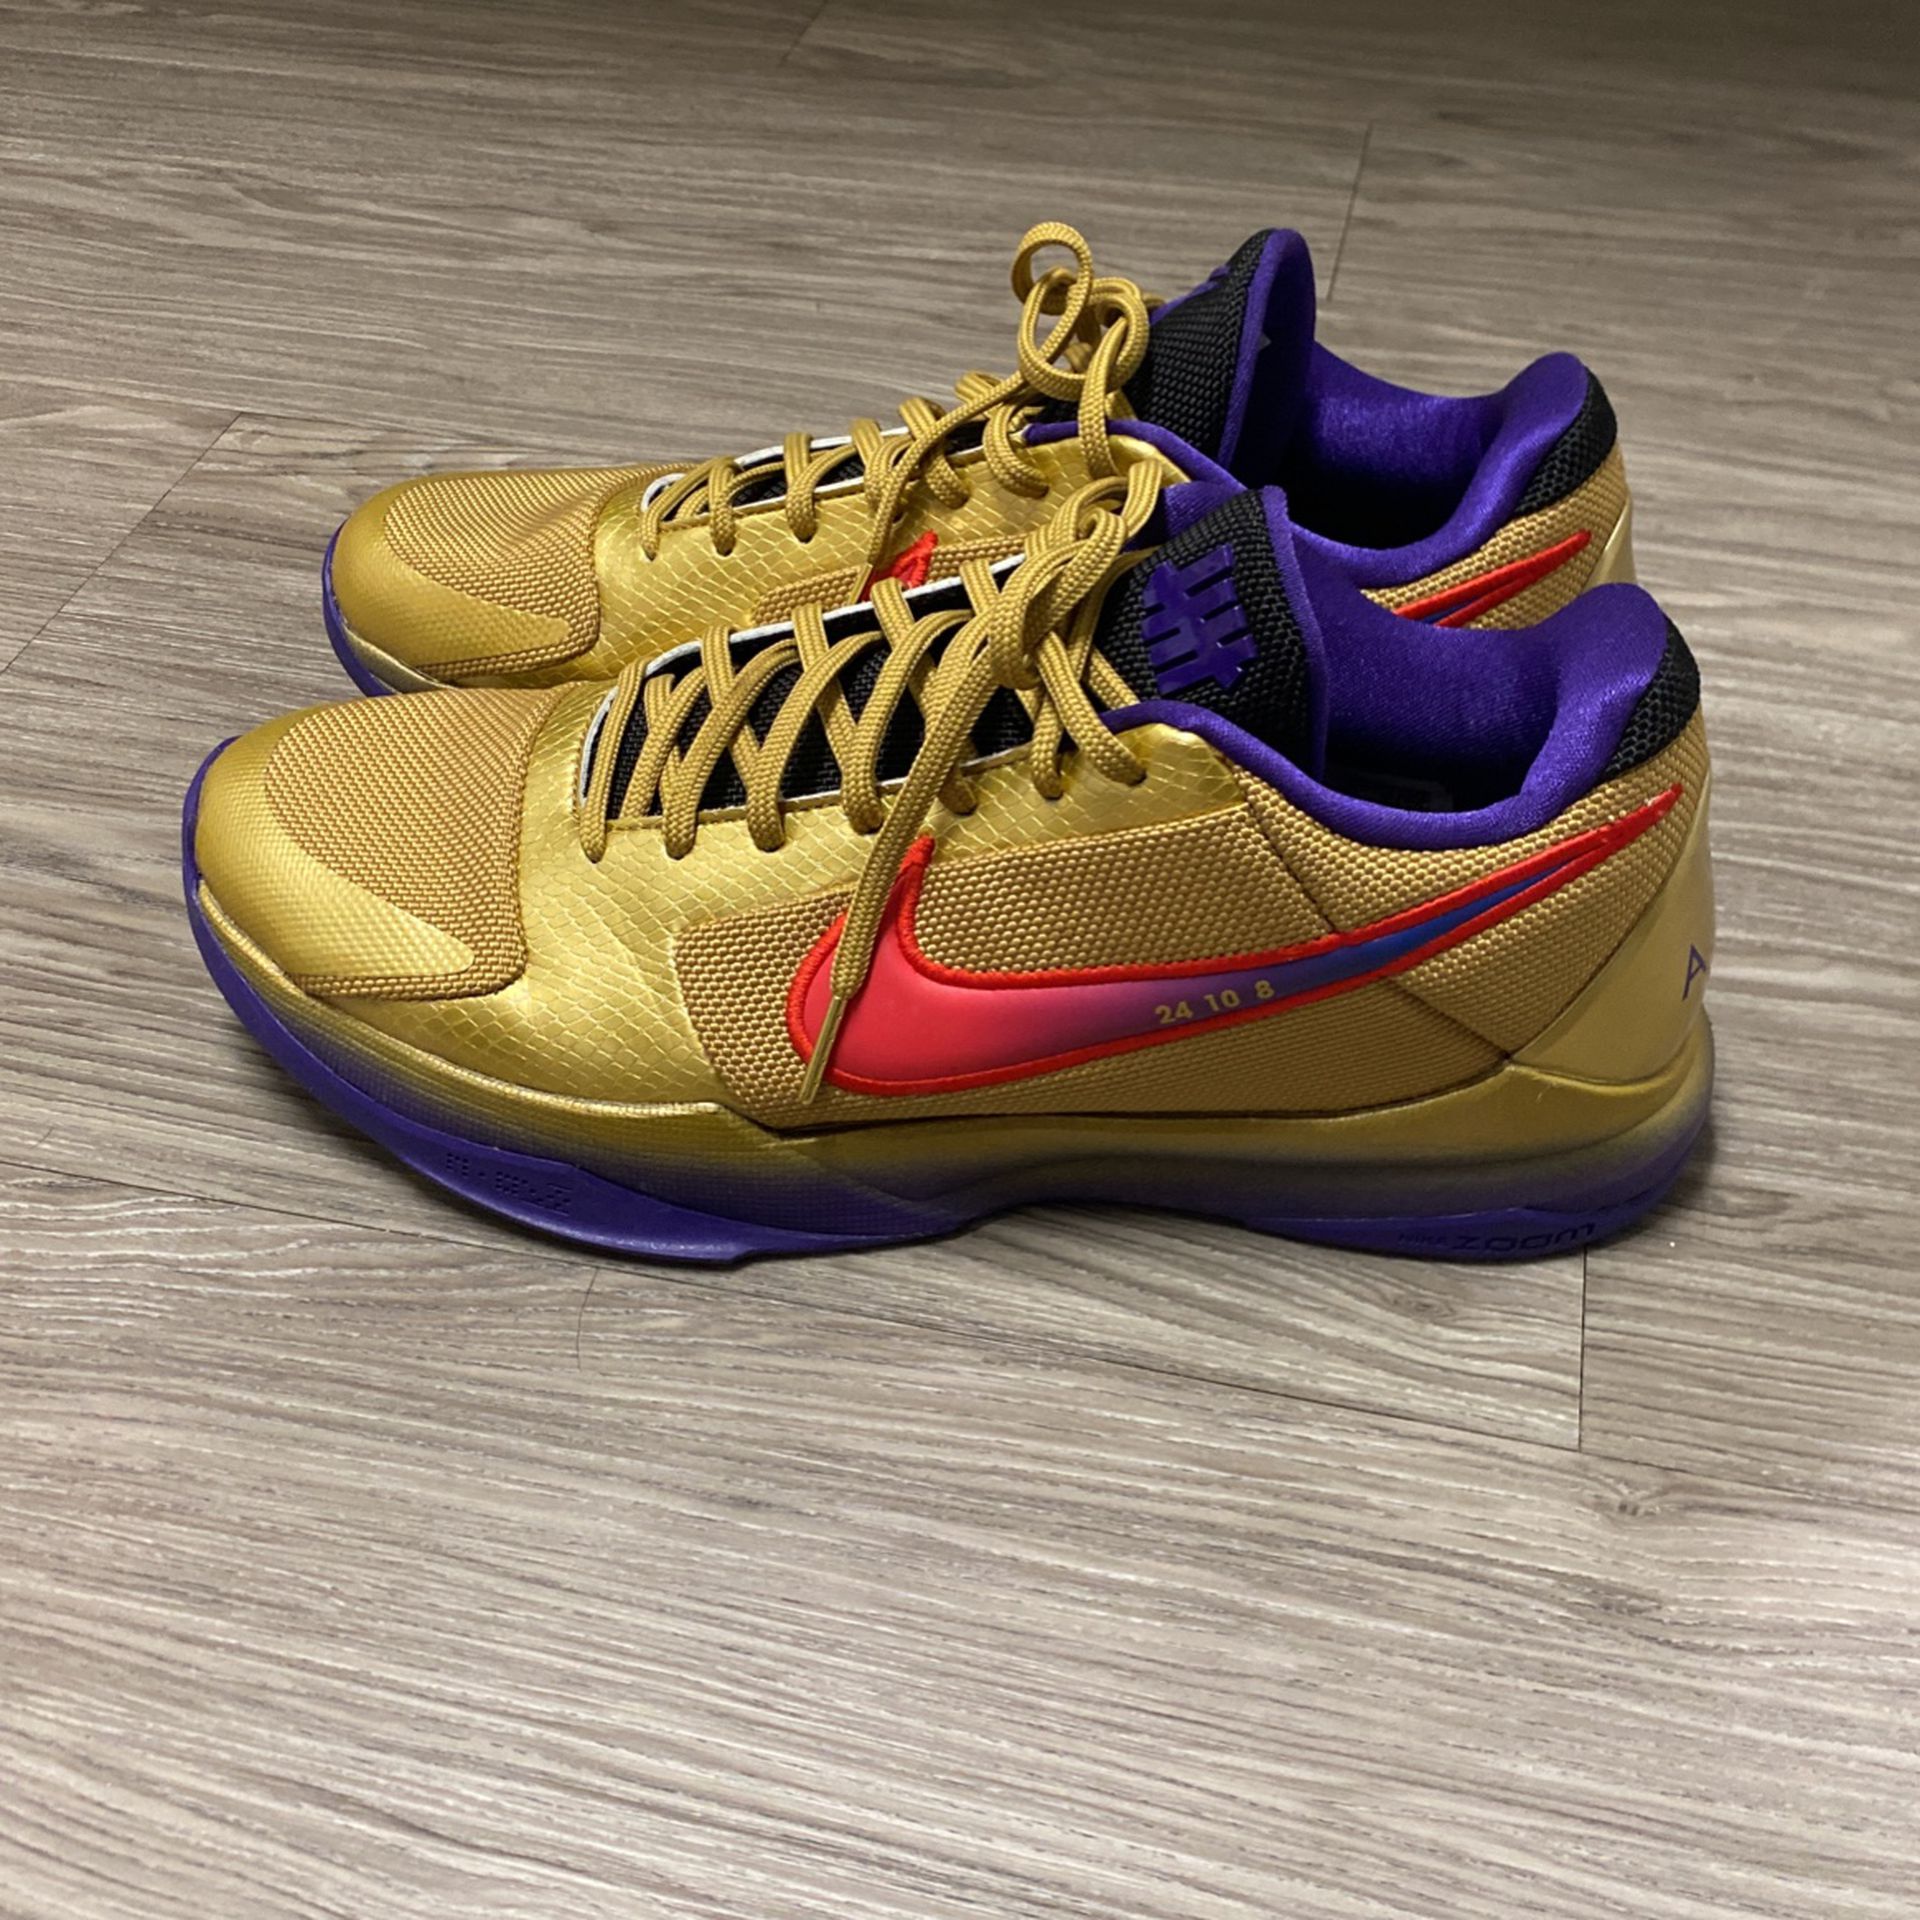 Undefeated x Nike Kobe 5 Protro “Hall of Fame” Metallic Gold/Field Purple-Multi-Color  – Sneaker Hello